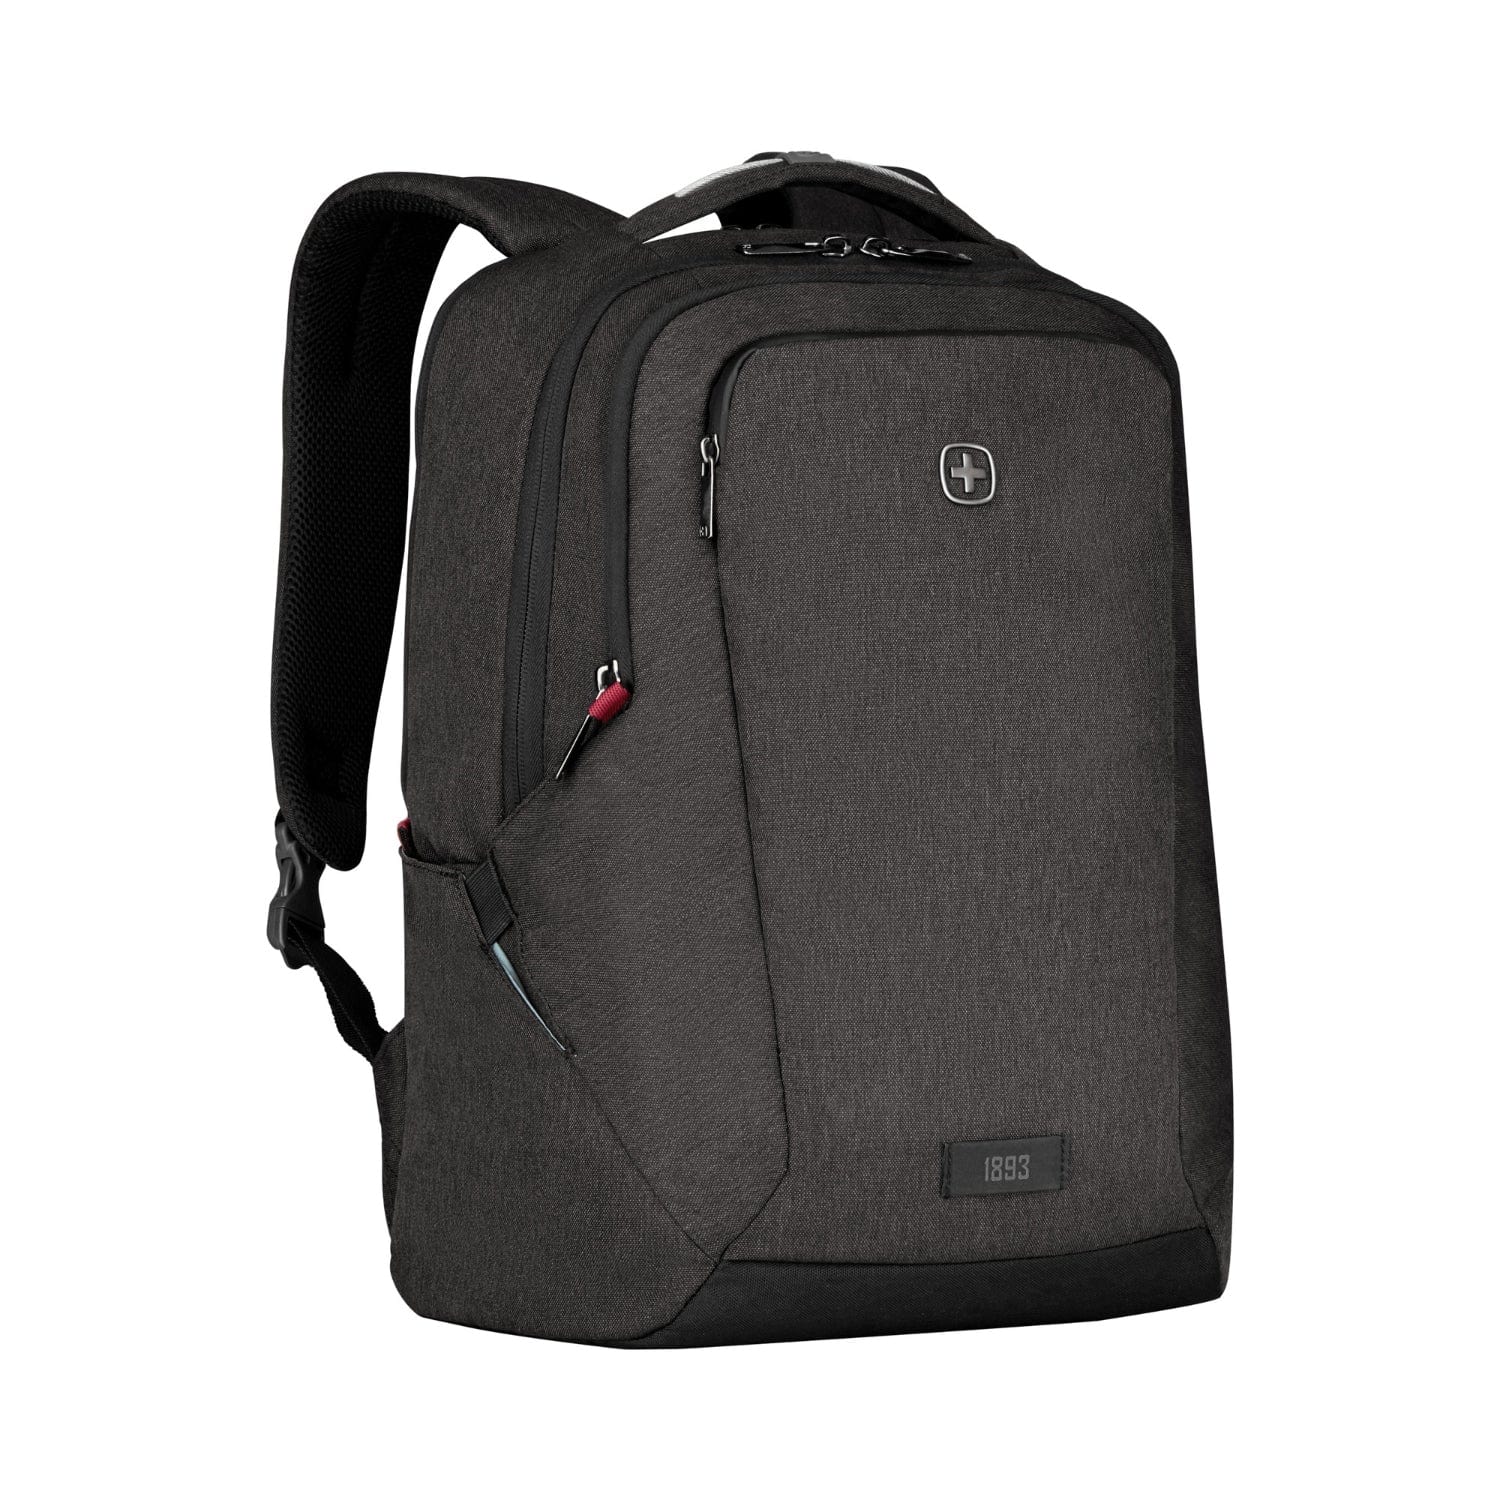 Wenger Mx Professional 16" Laptop Backpack with Tablet Pocket Grey - 611641